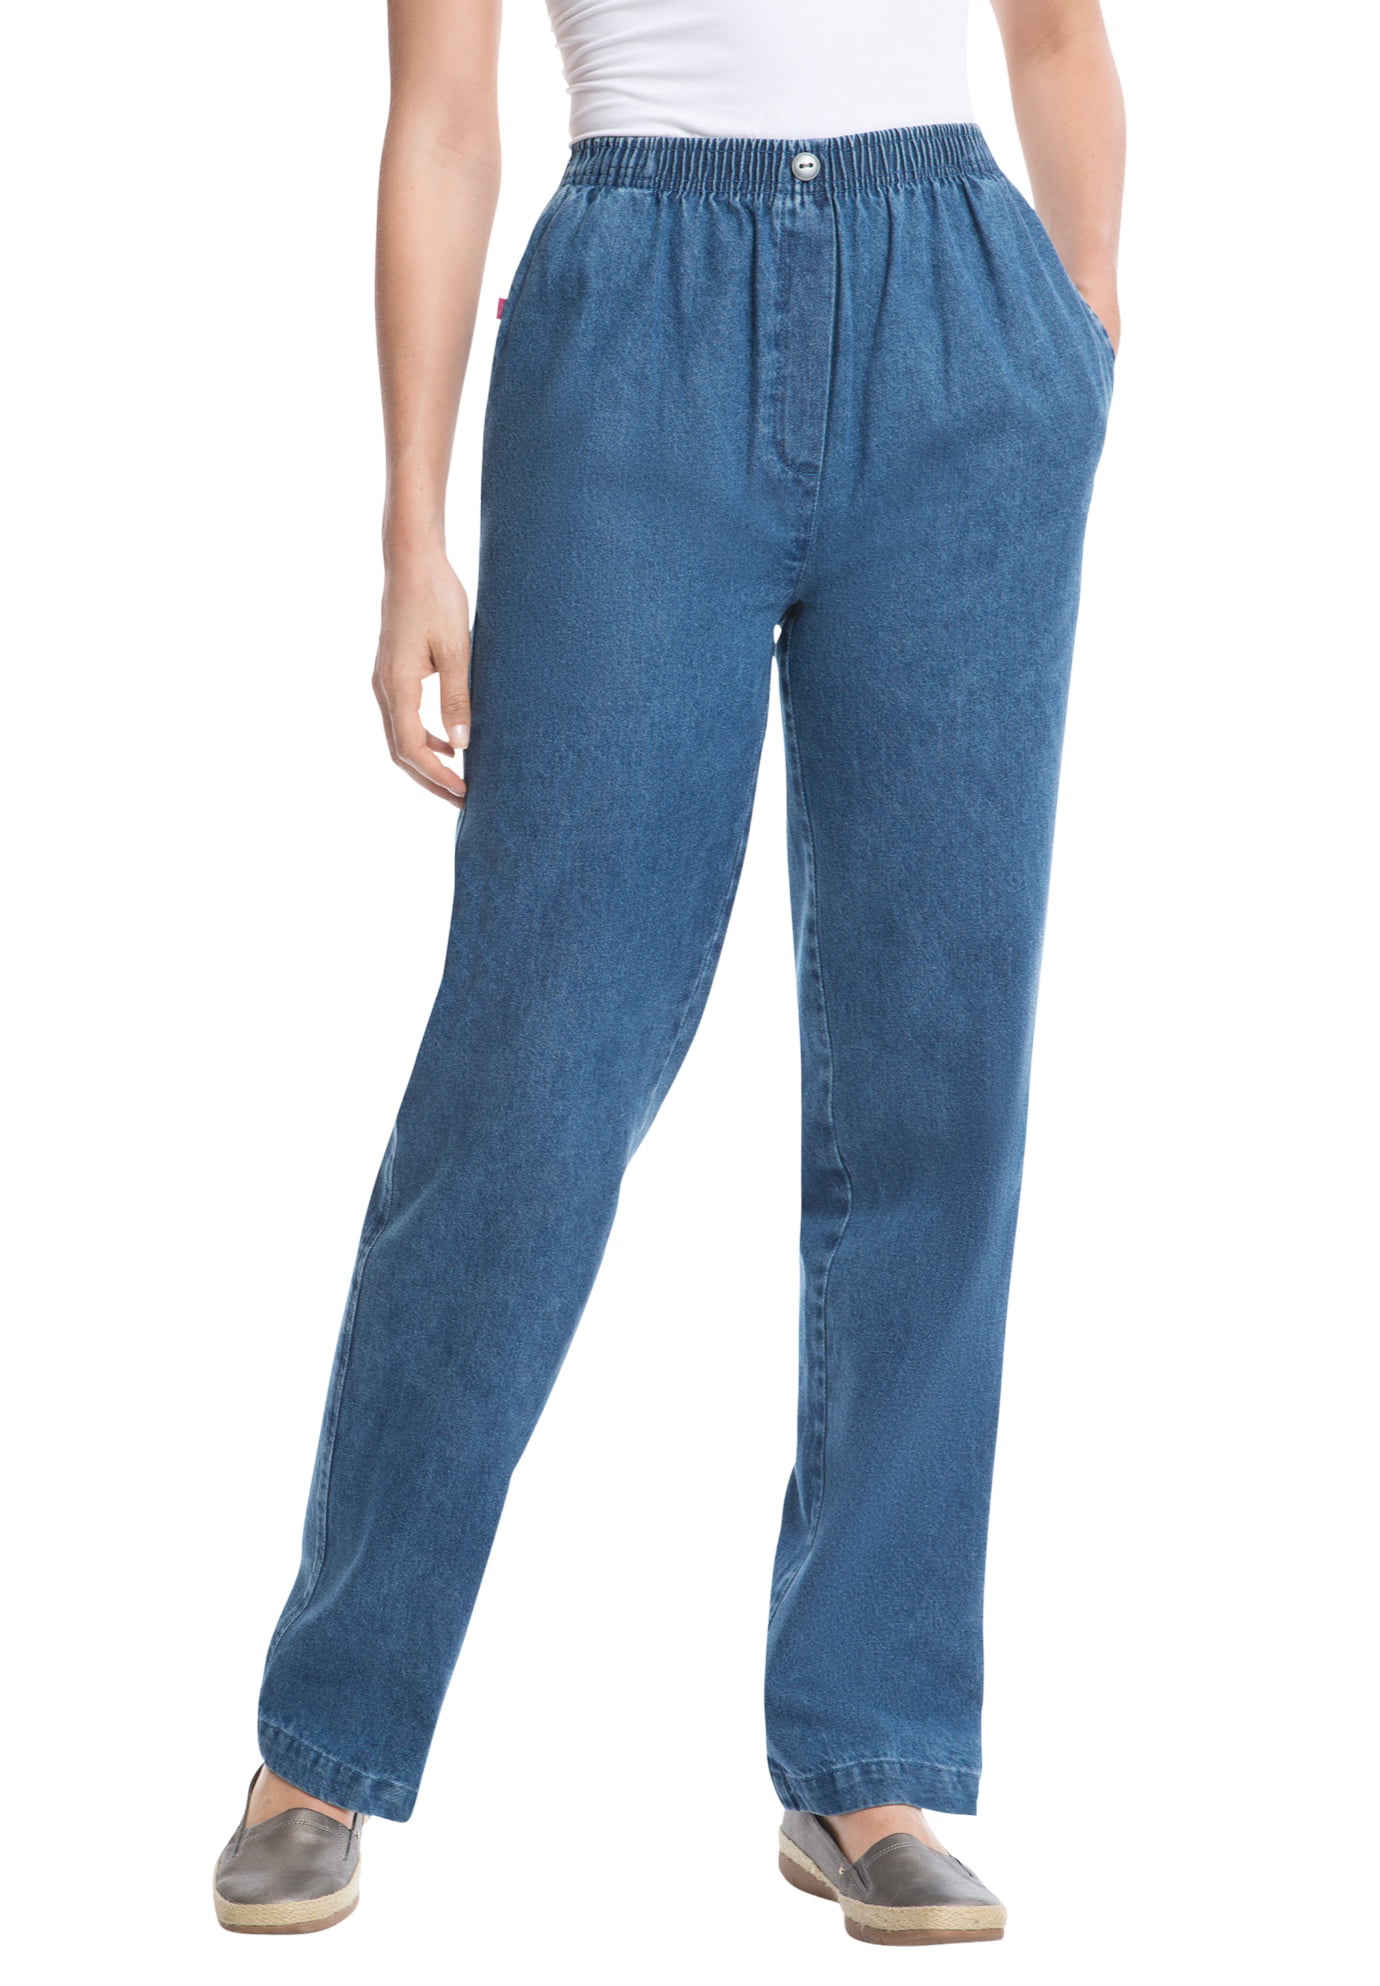 women's elastic waist jeans tall